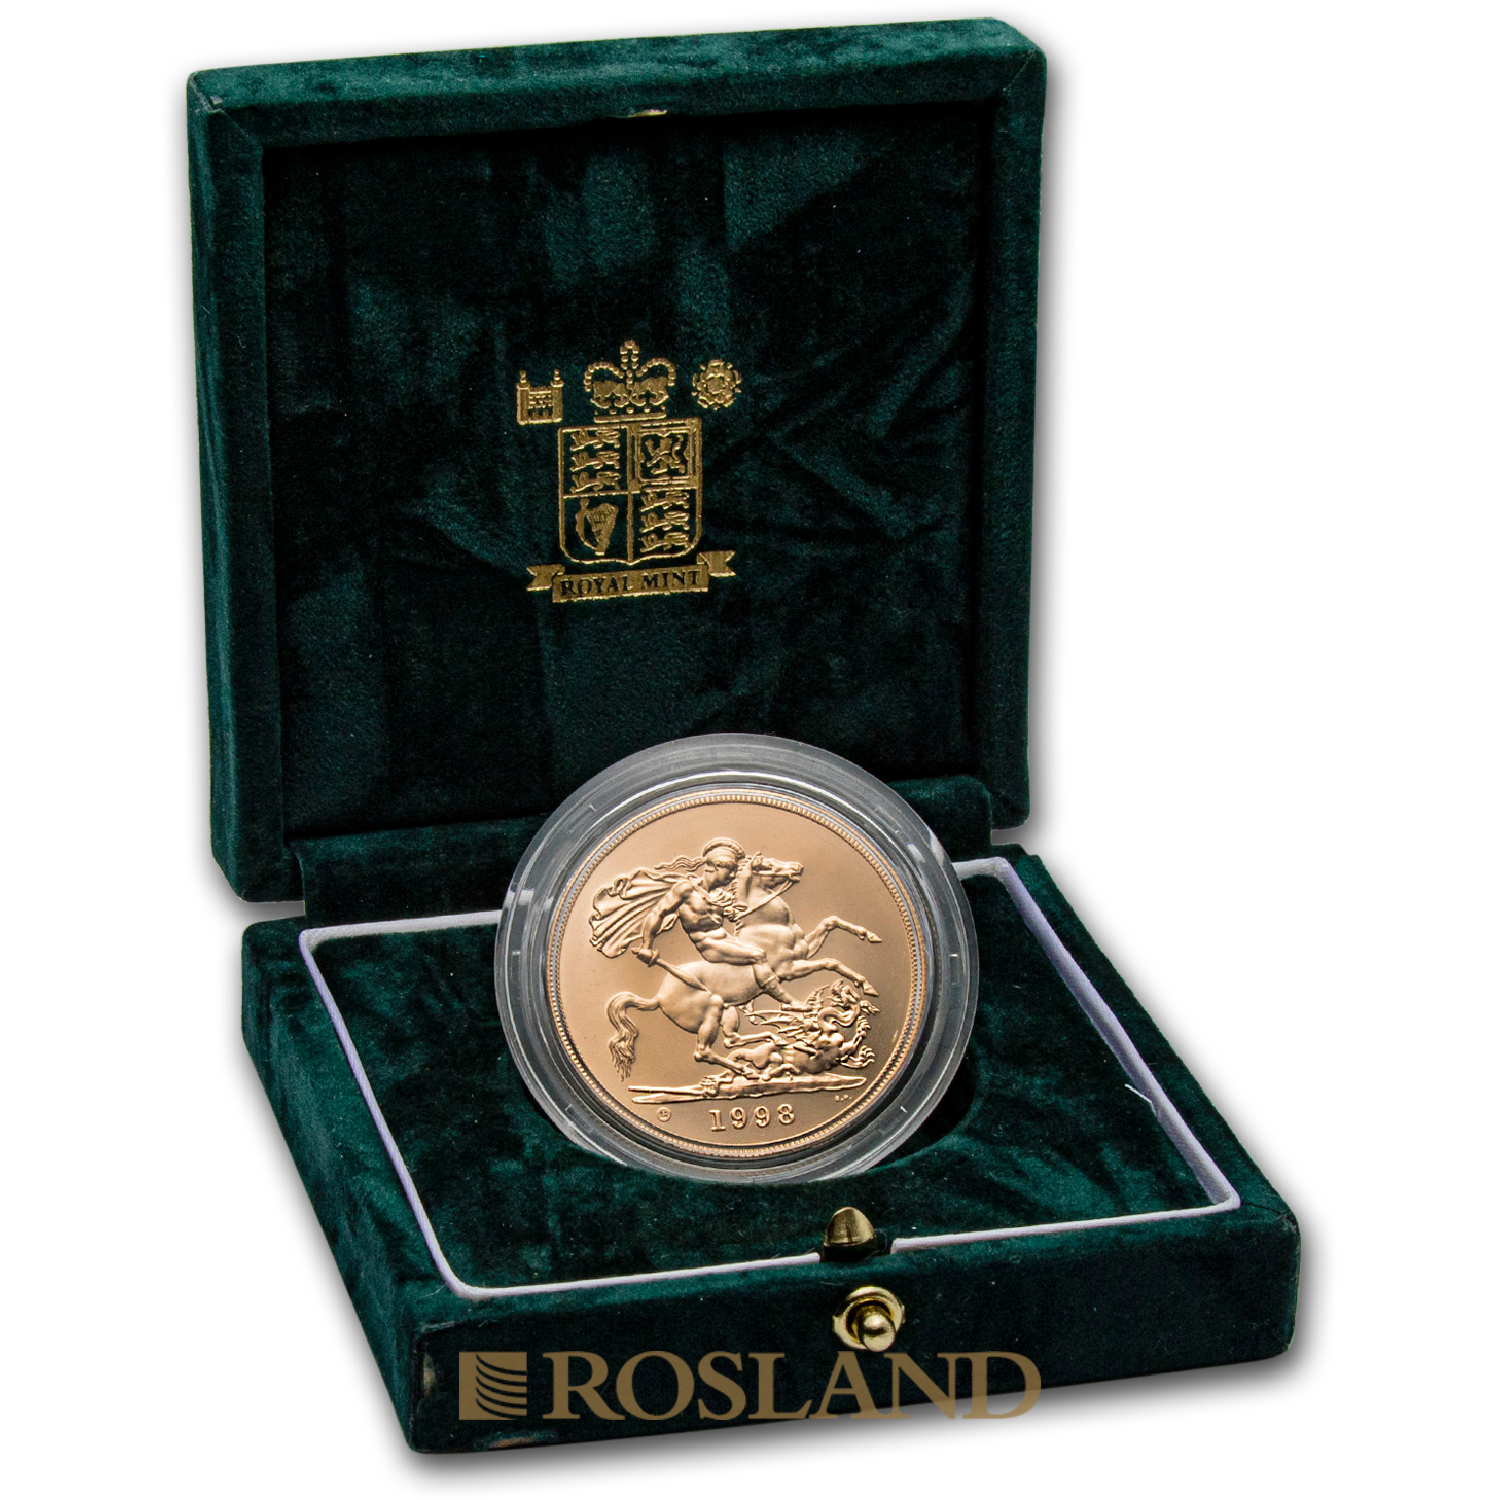 5 Sovereign Goldmünze Großbritannien 1998 (Box, Zertifikat)